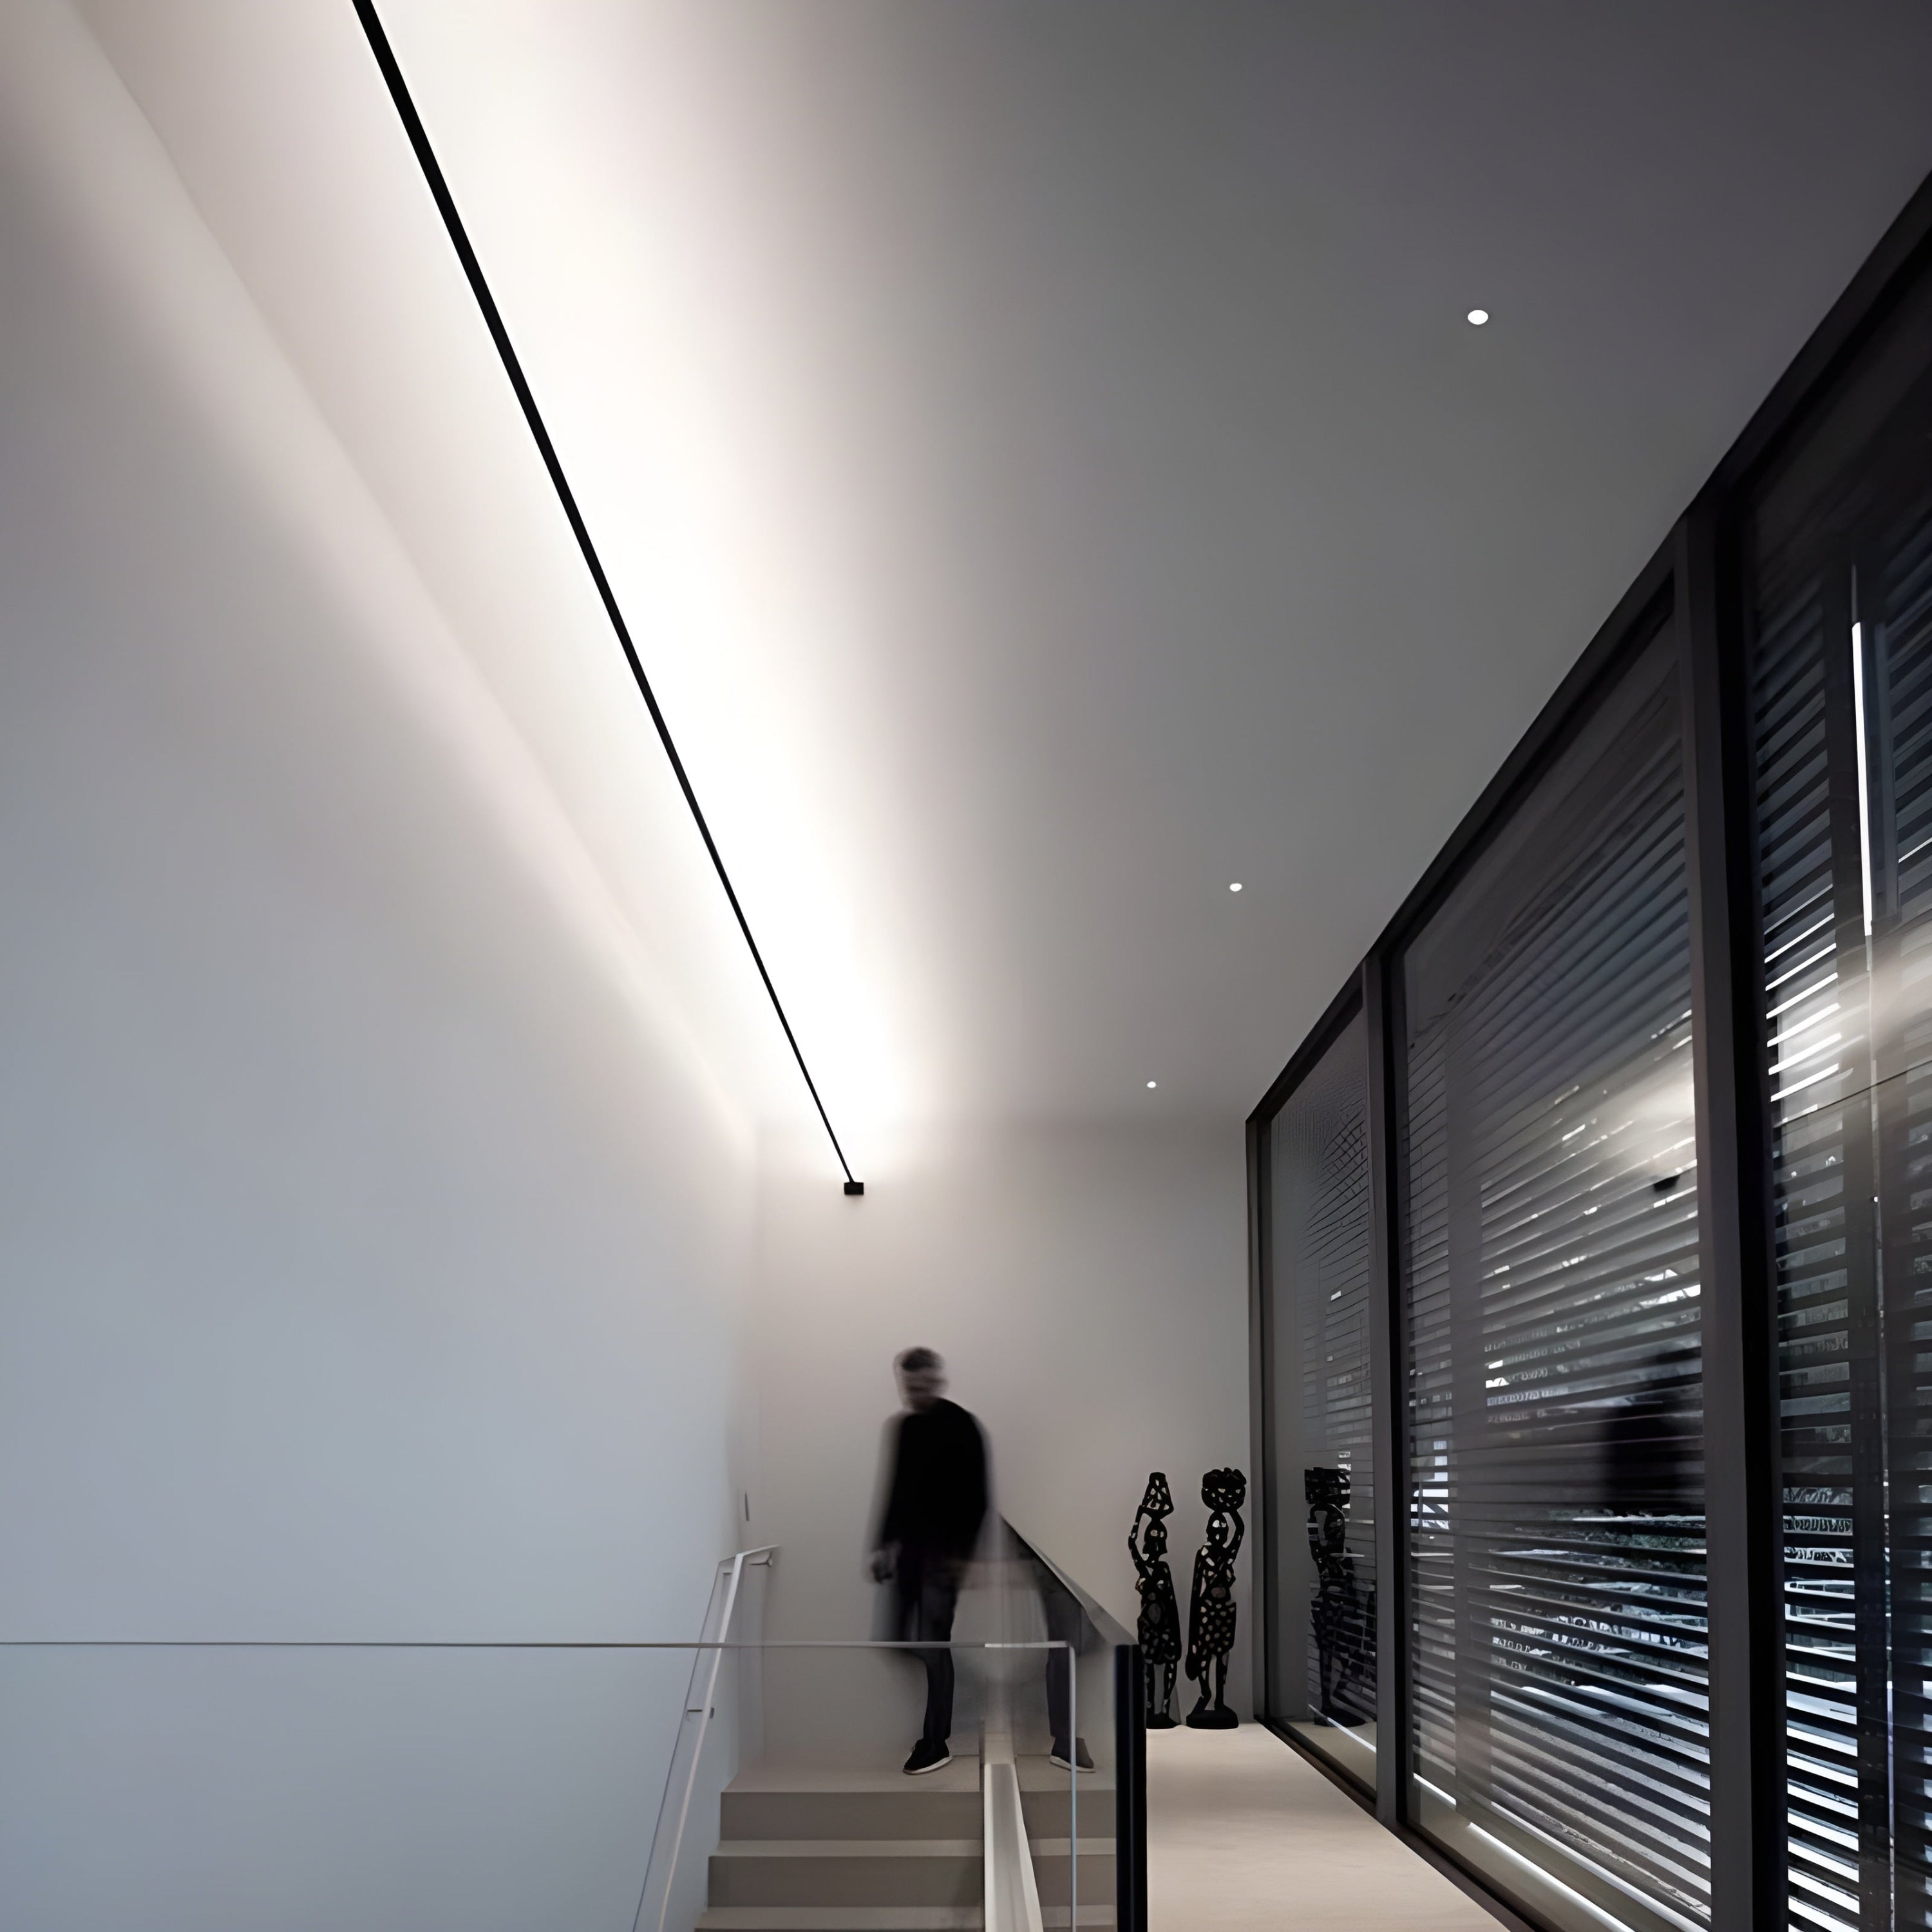 Skyline Linear Led Lighting | Modern Wall Lights | Ceiling Lamps For Living Room | Casalola - Sconces